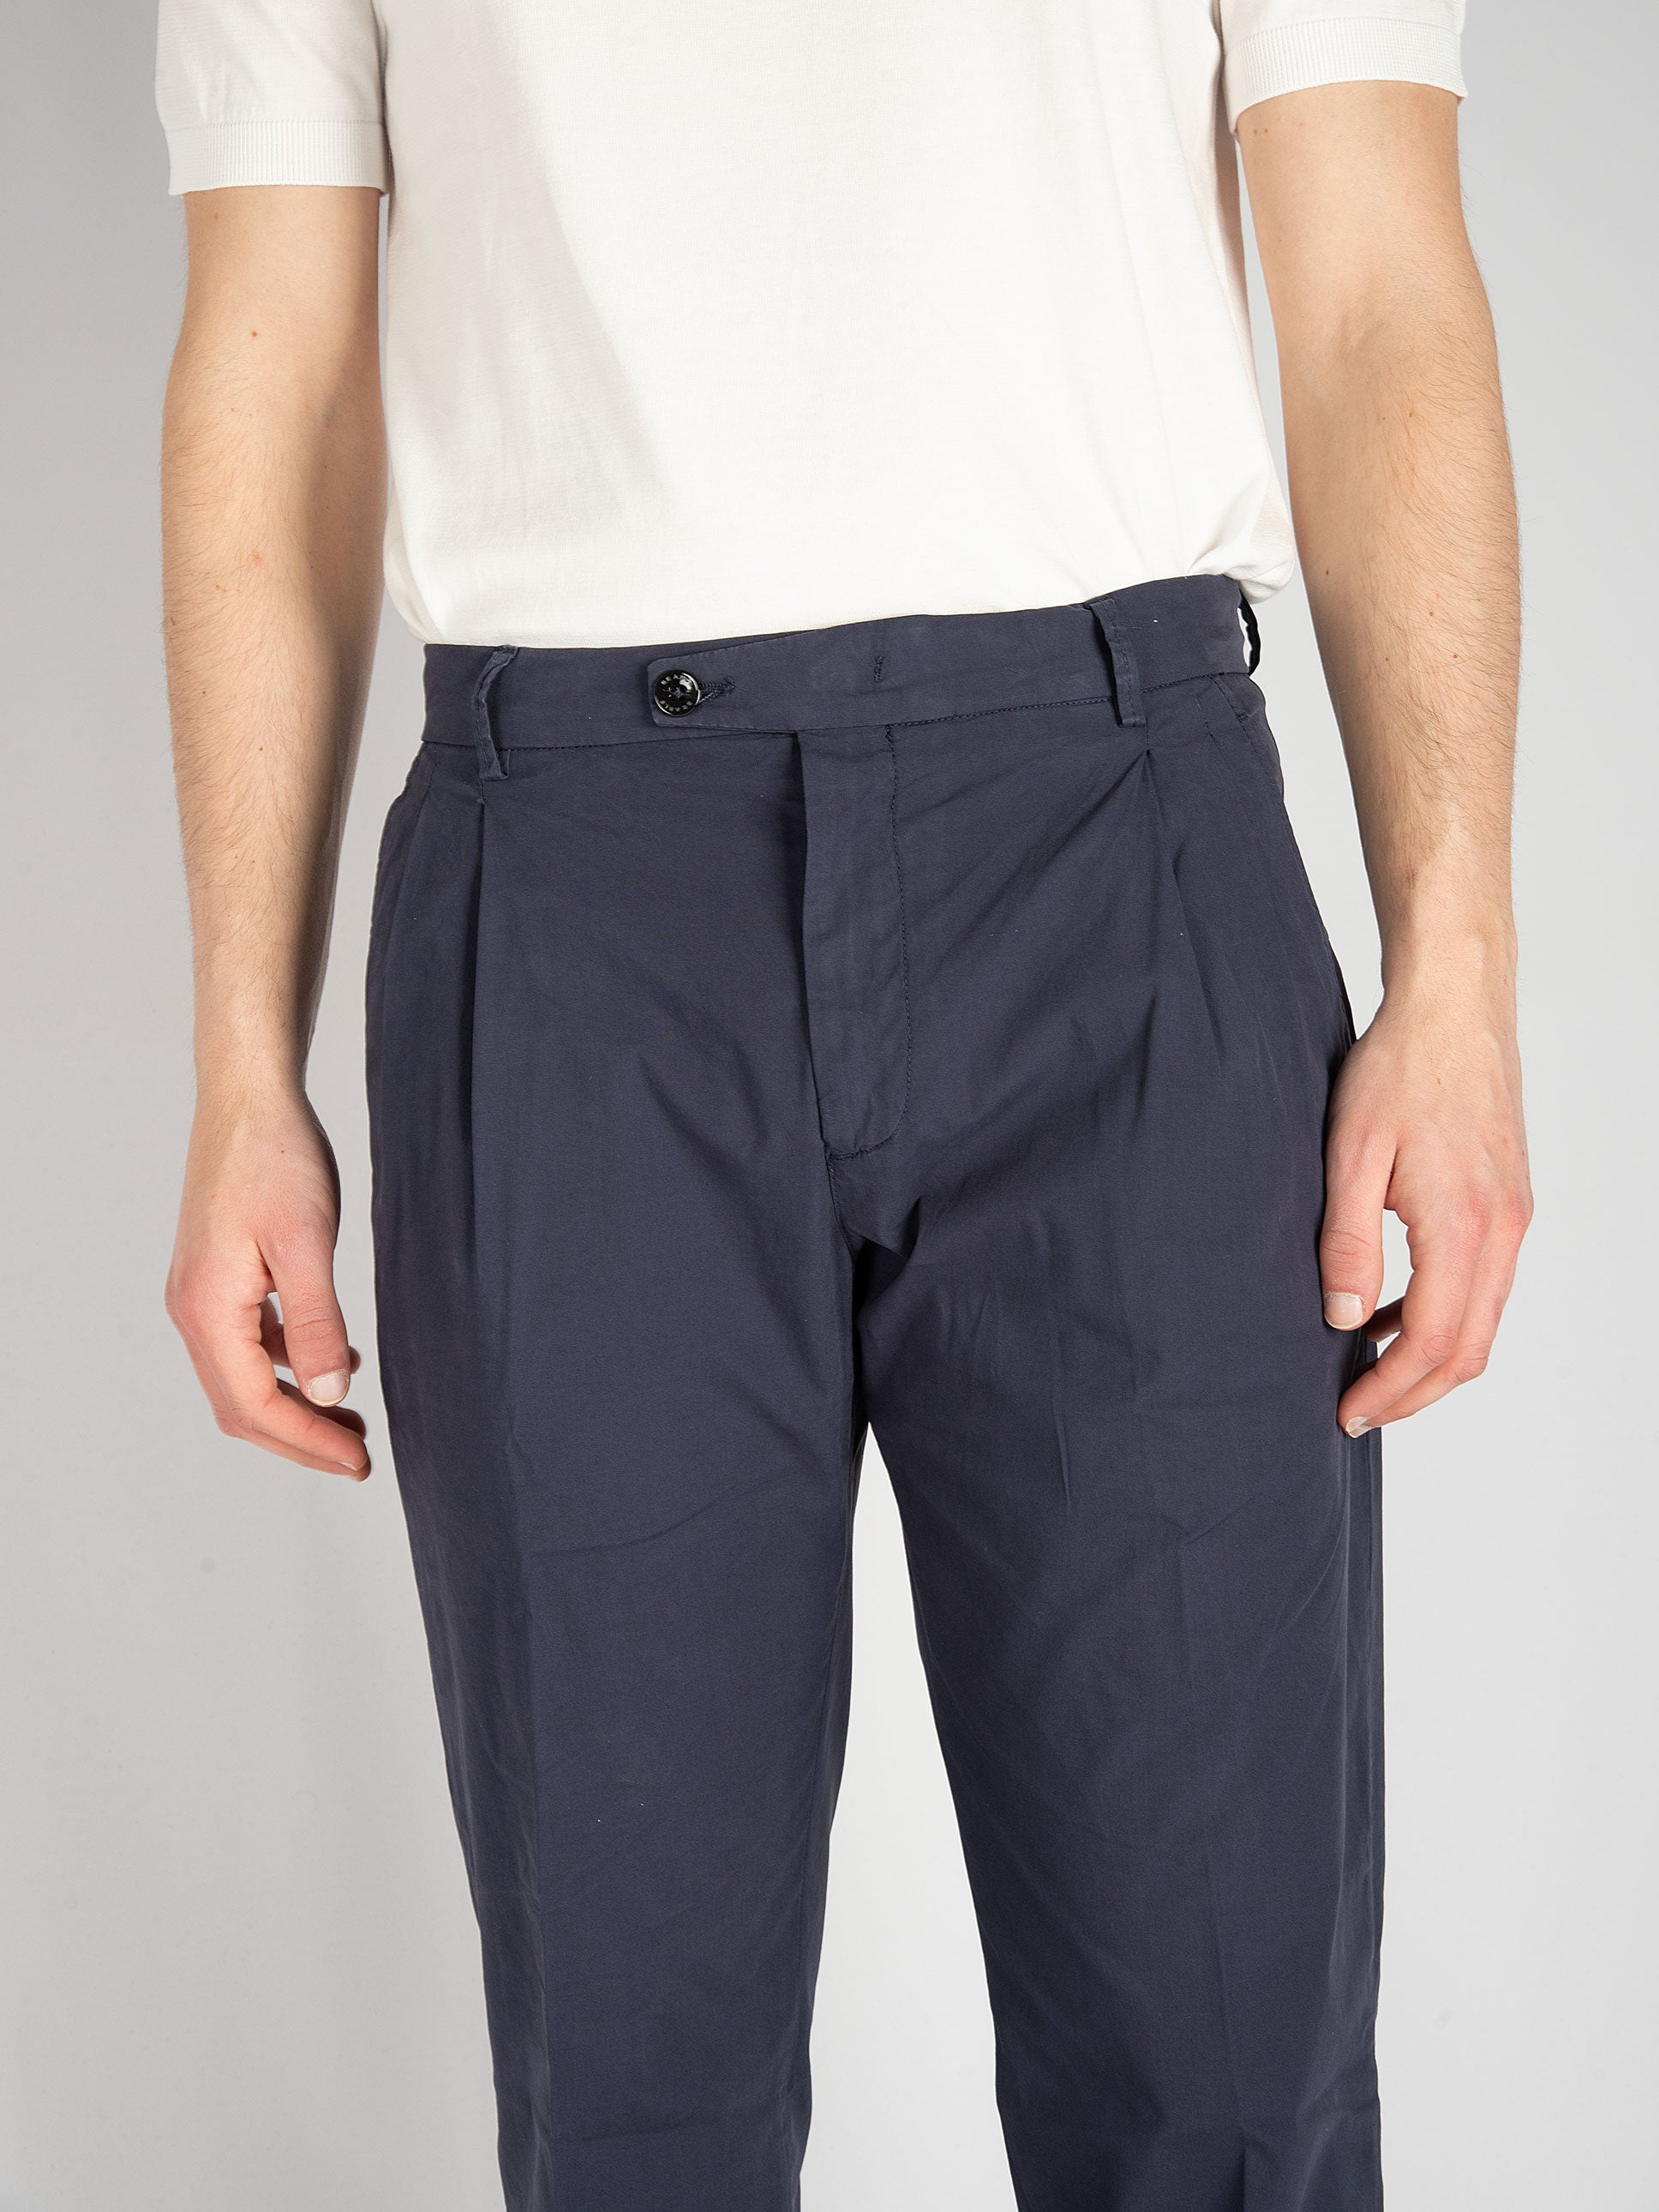 Pantalone Robert in Cotone - Blu Scuro